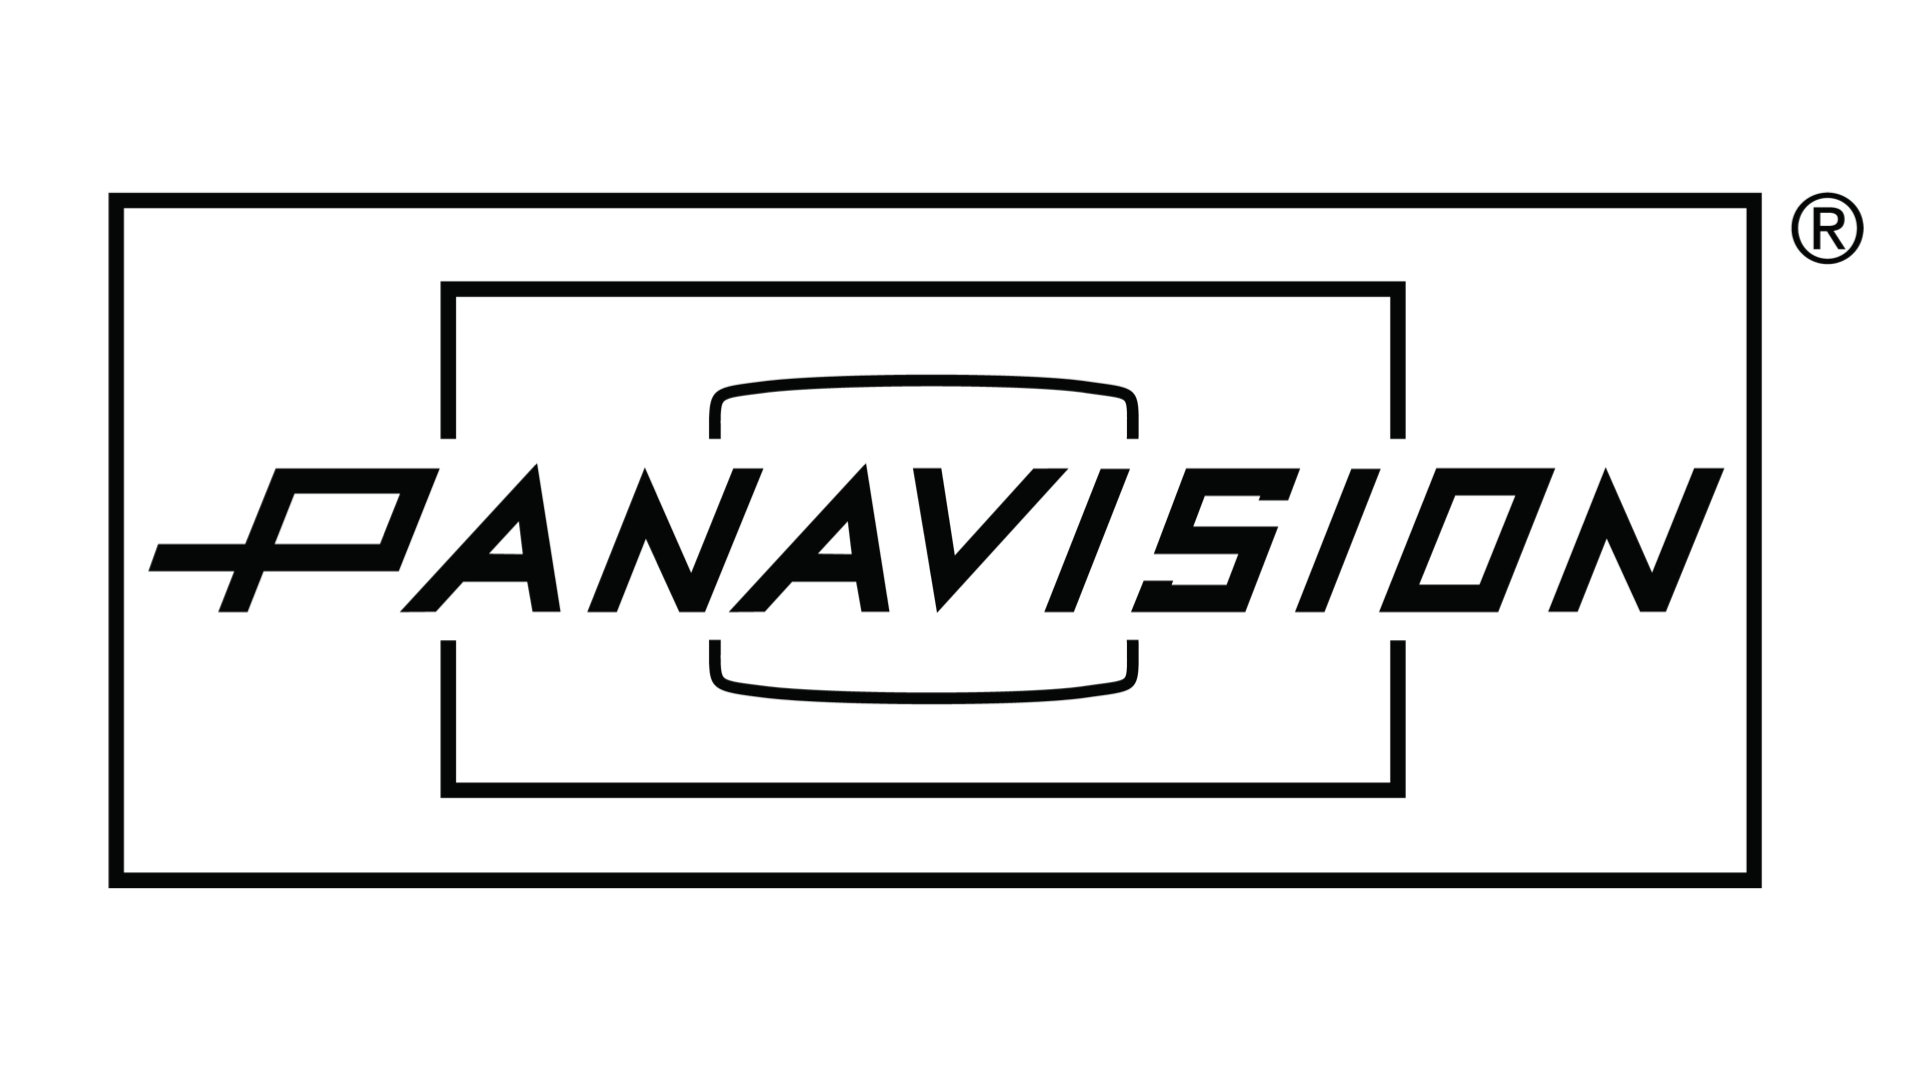 http://www.panavision.com/images/default-source/articles/images/panavision-logo.001.jpeg?sfvrsn=efeb28a8_3